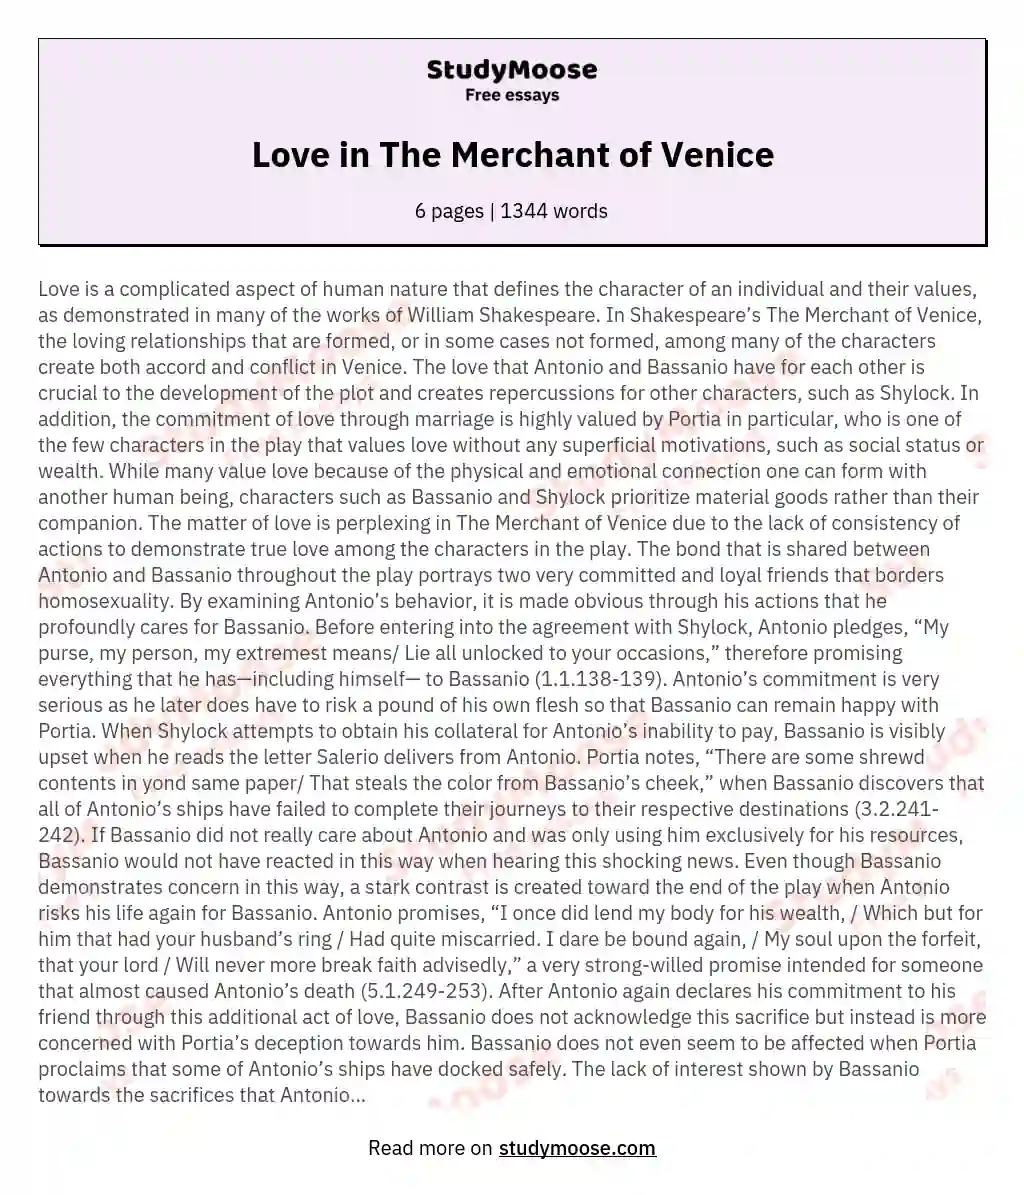 Love in The Merchant of Venice essay